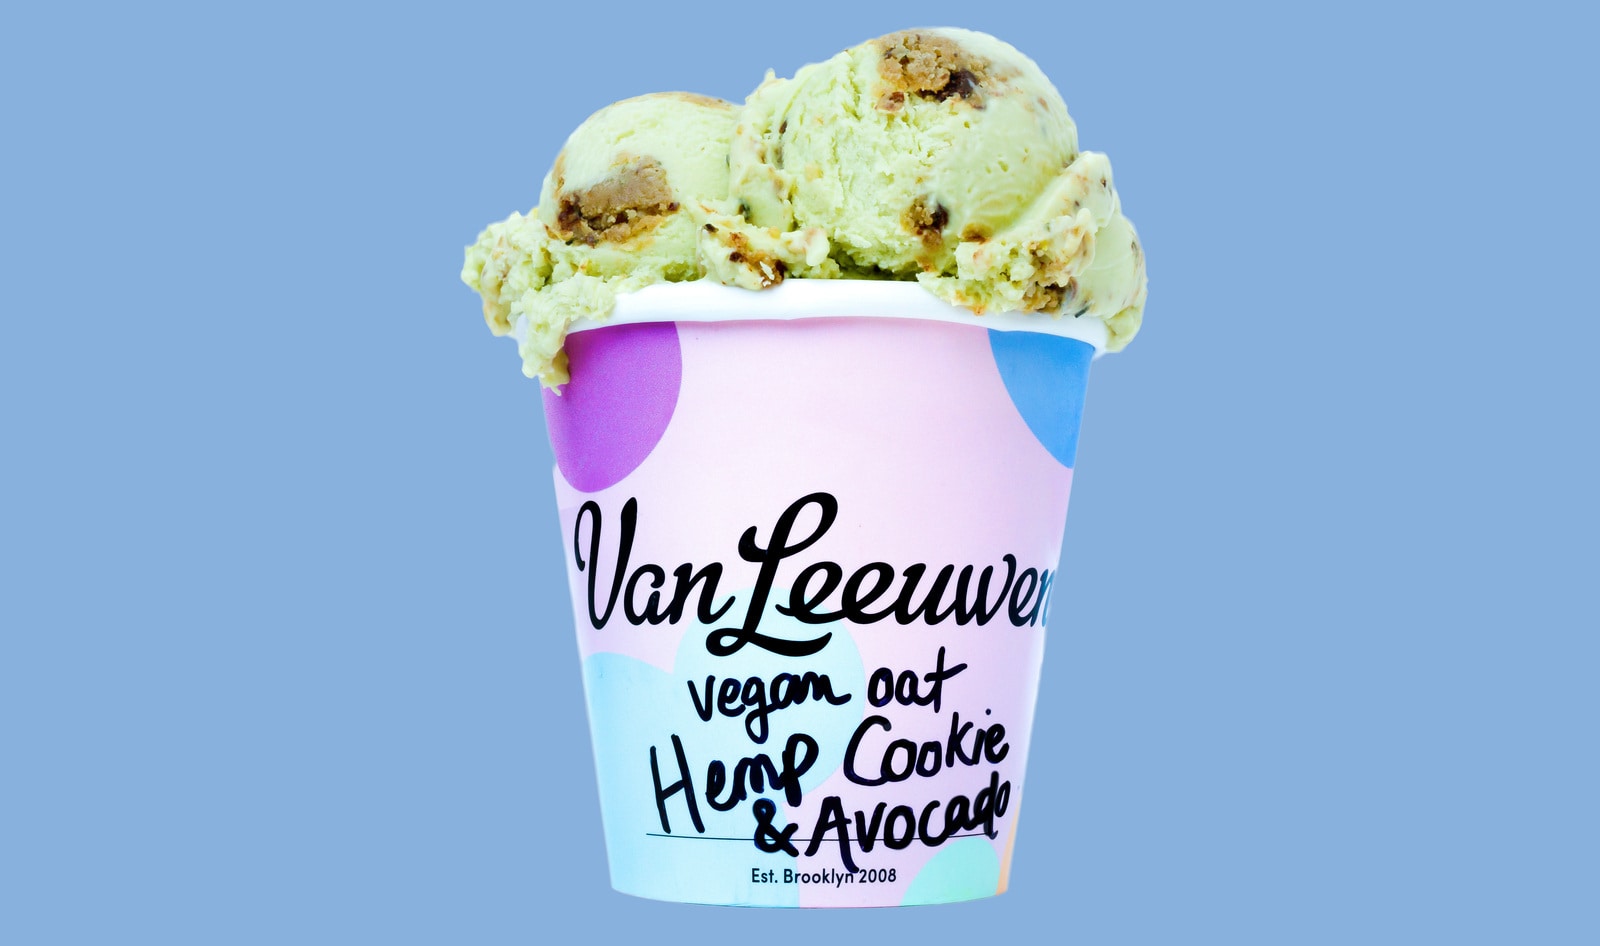 Van Leeuwen Debuts Vegan Hemp Cookie &amp; Avocado Ice Cream at Los Angeles Scoop Shops